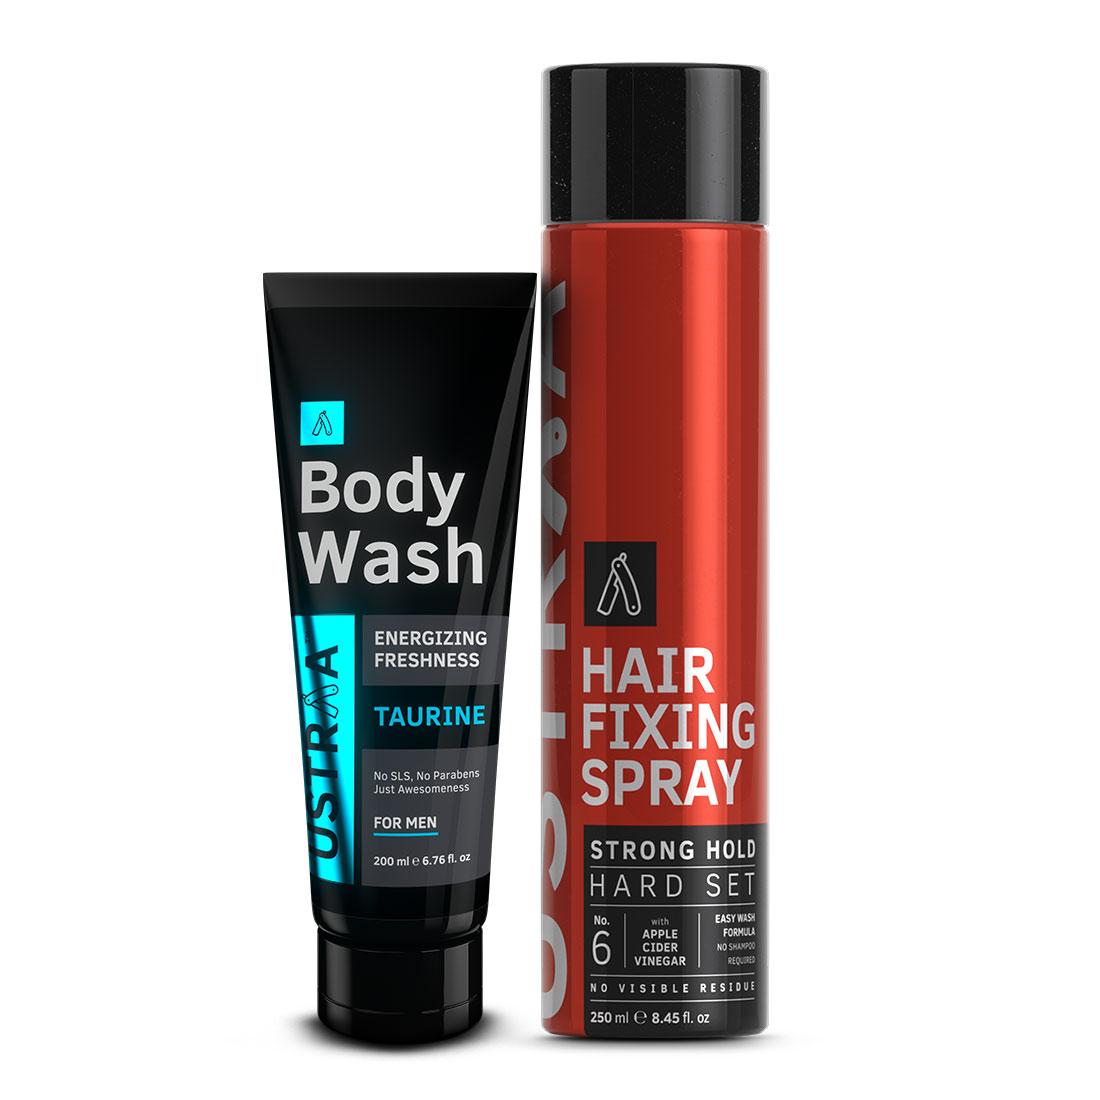 Body Wash (Taurine) & Hair Fixing Spray